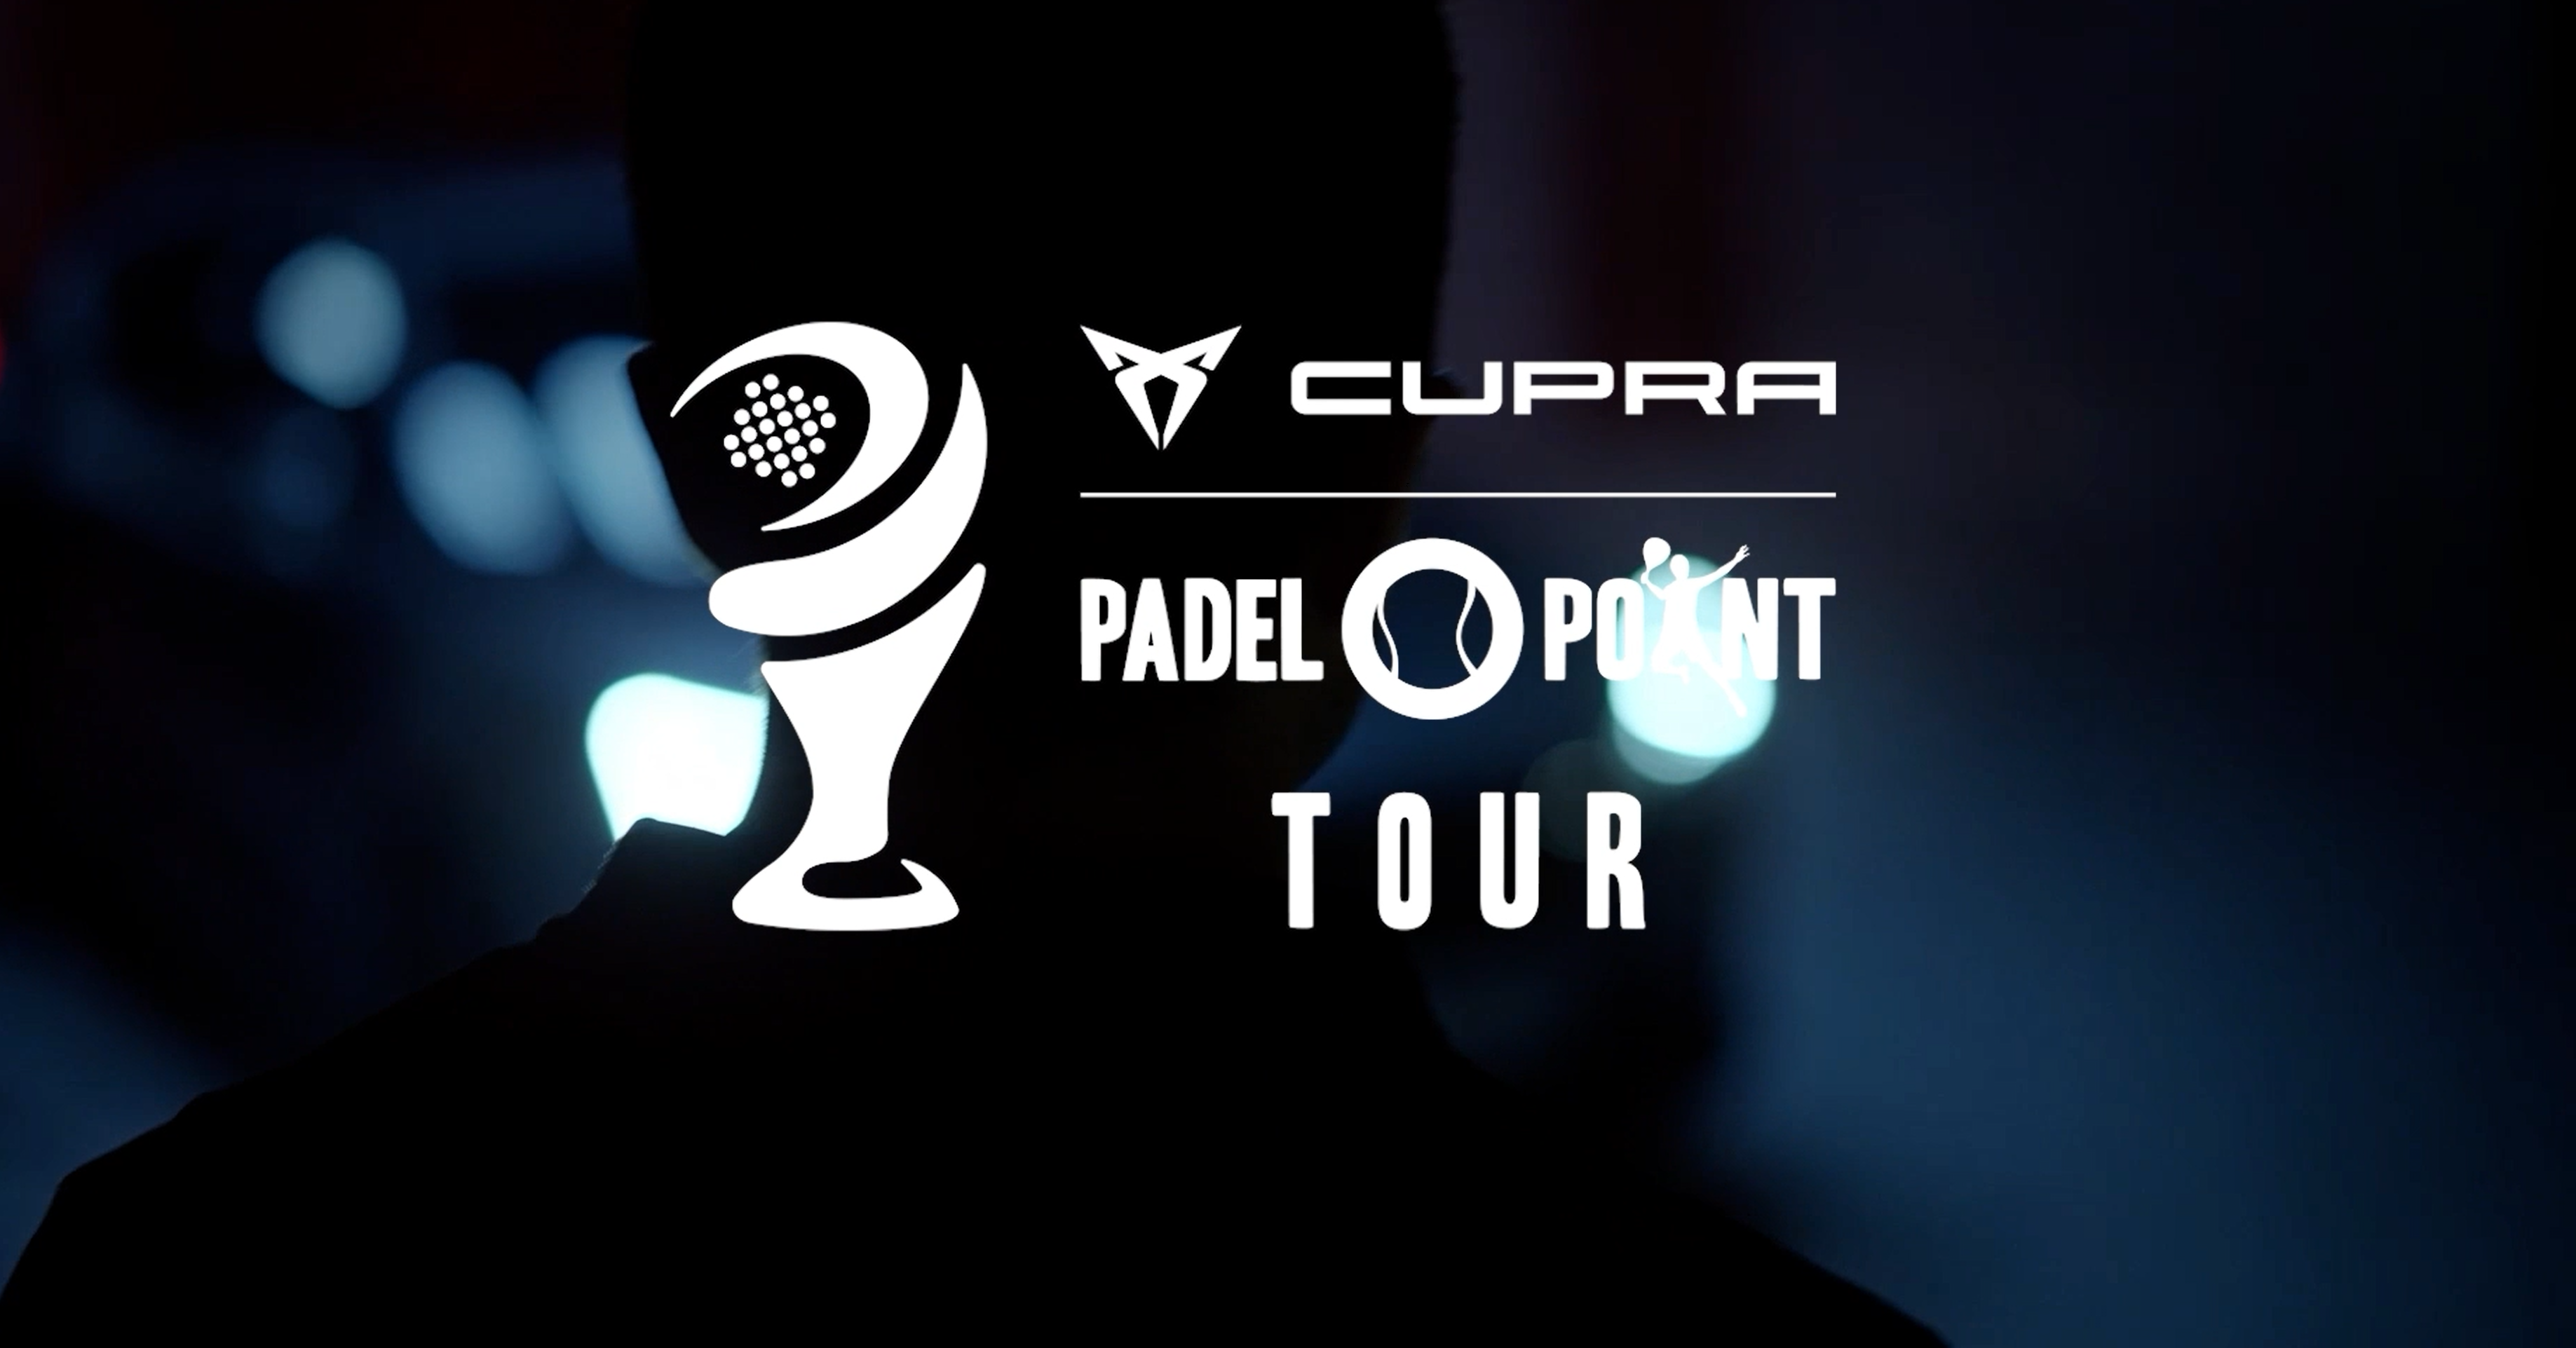 Cupra Padel-Point Tour Rennes – Een boeiende tentoonstelling!